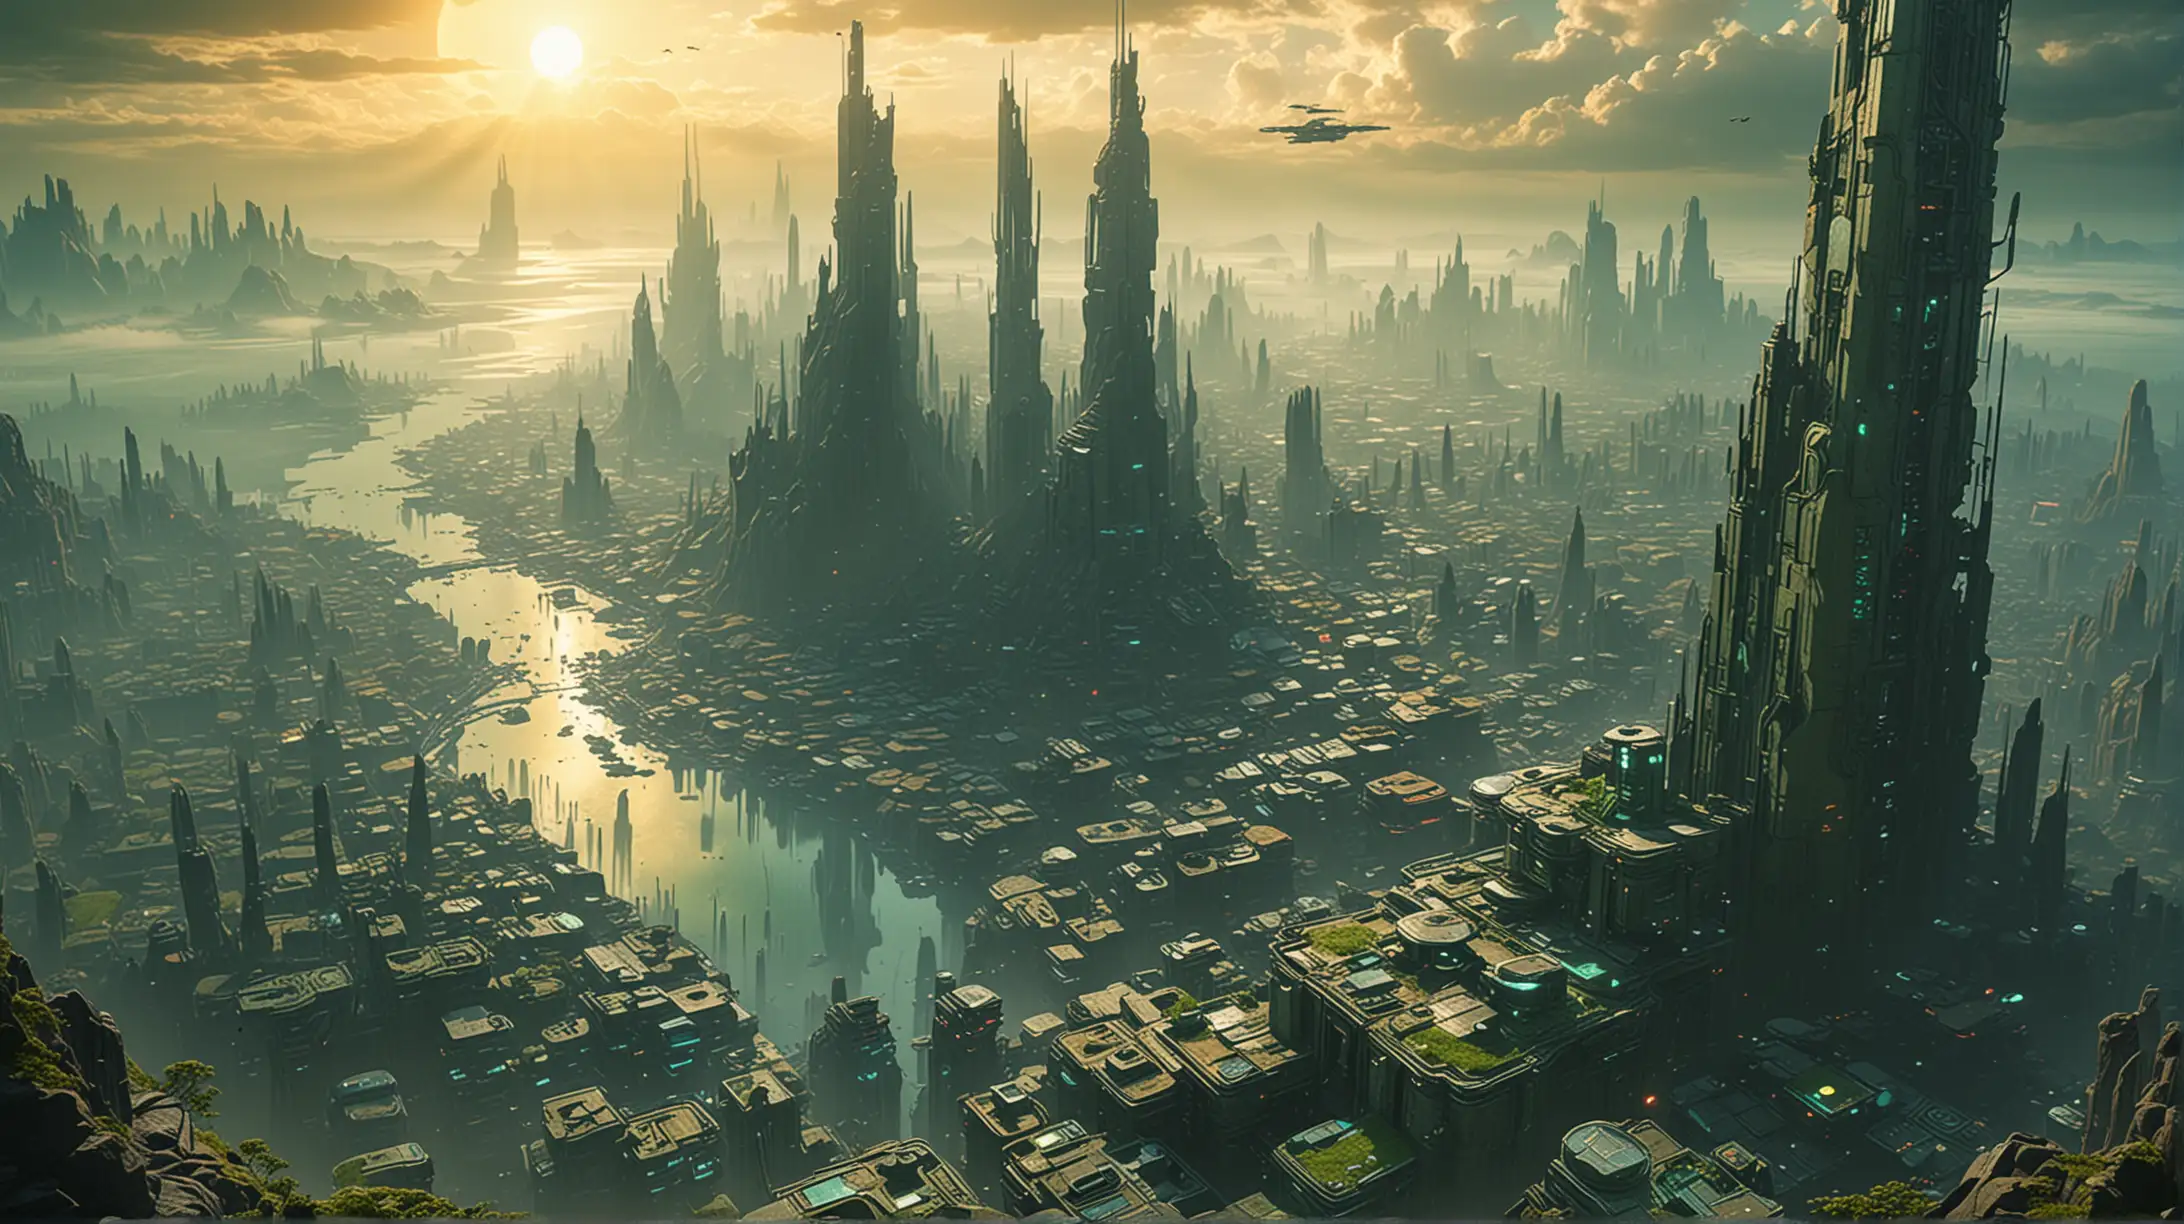 Futuristic Cyberpunk Cityscape Stone Glass and Steel on Distant Planet